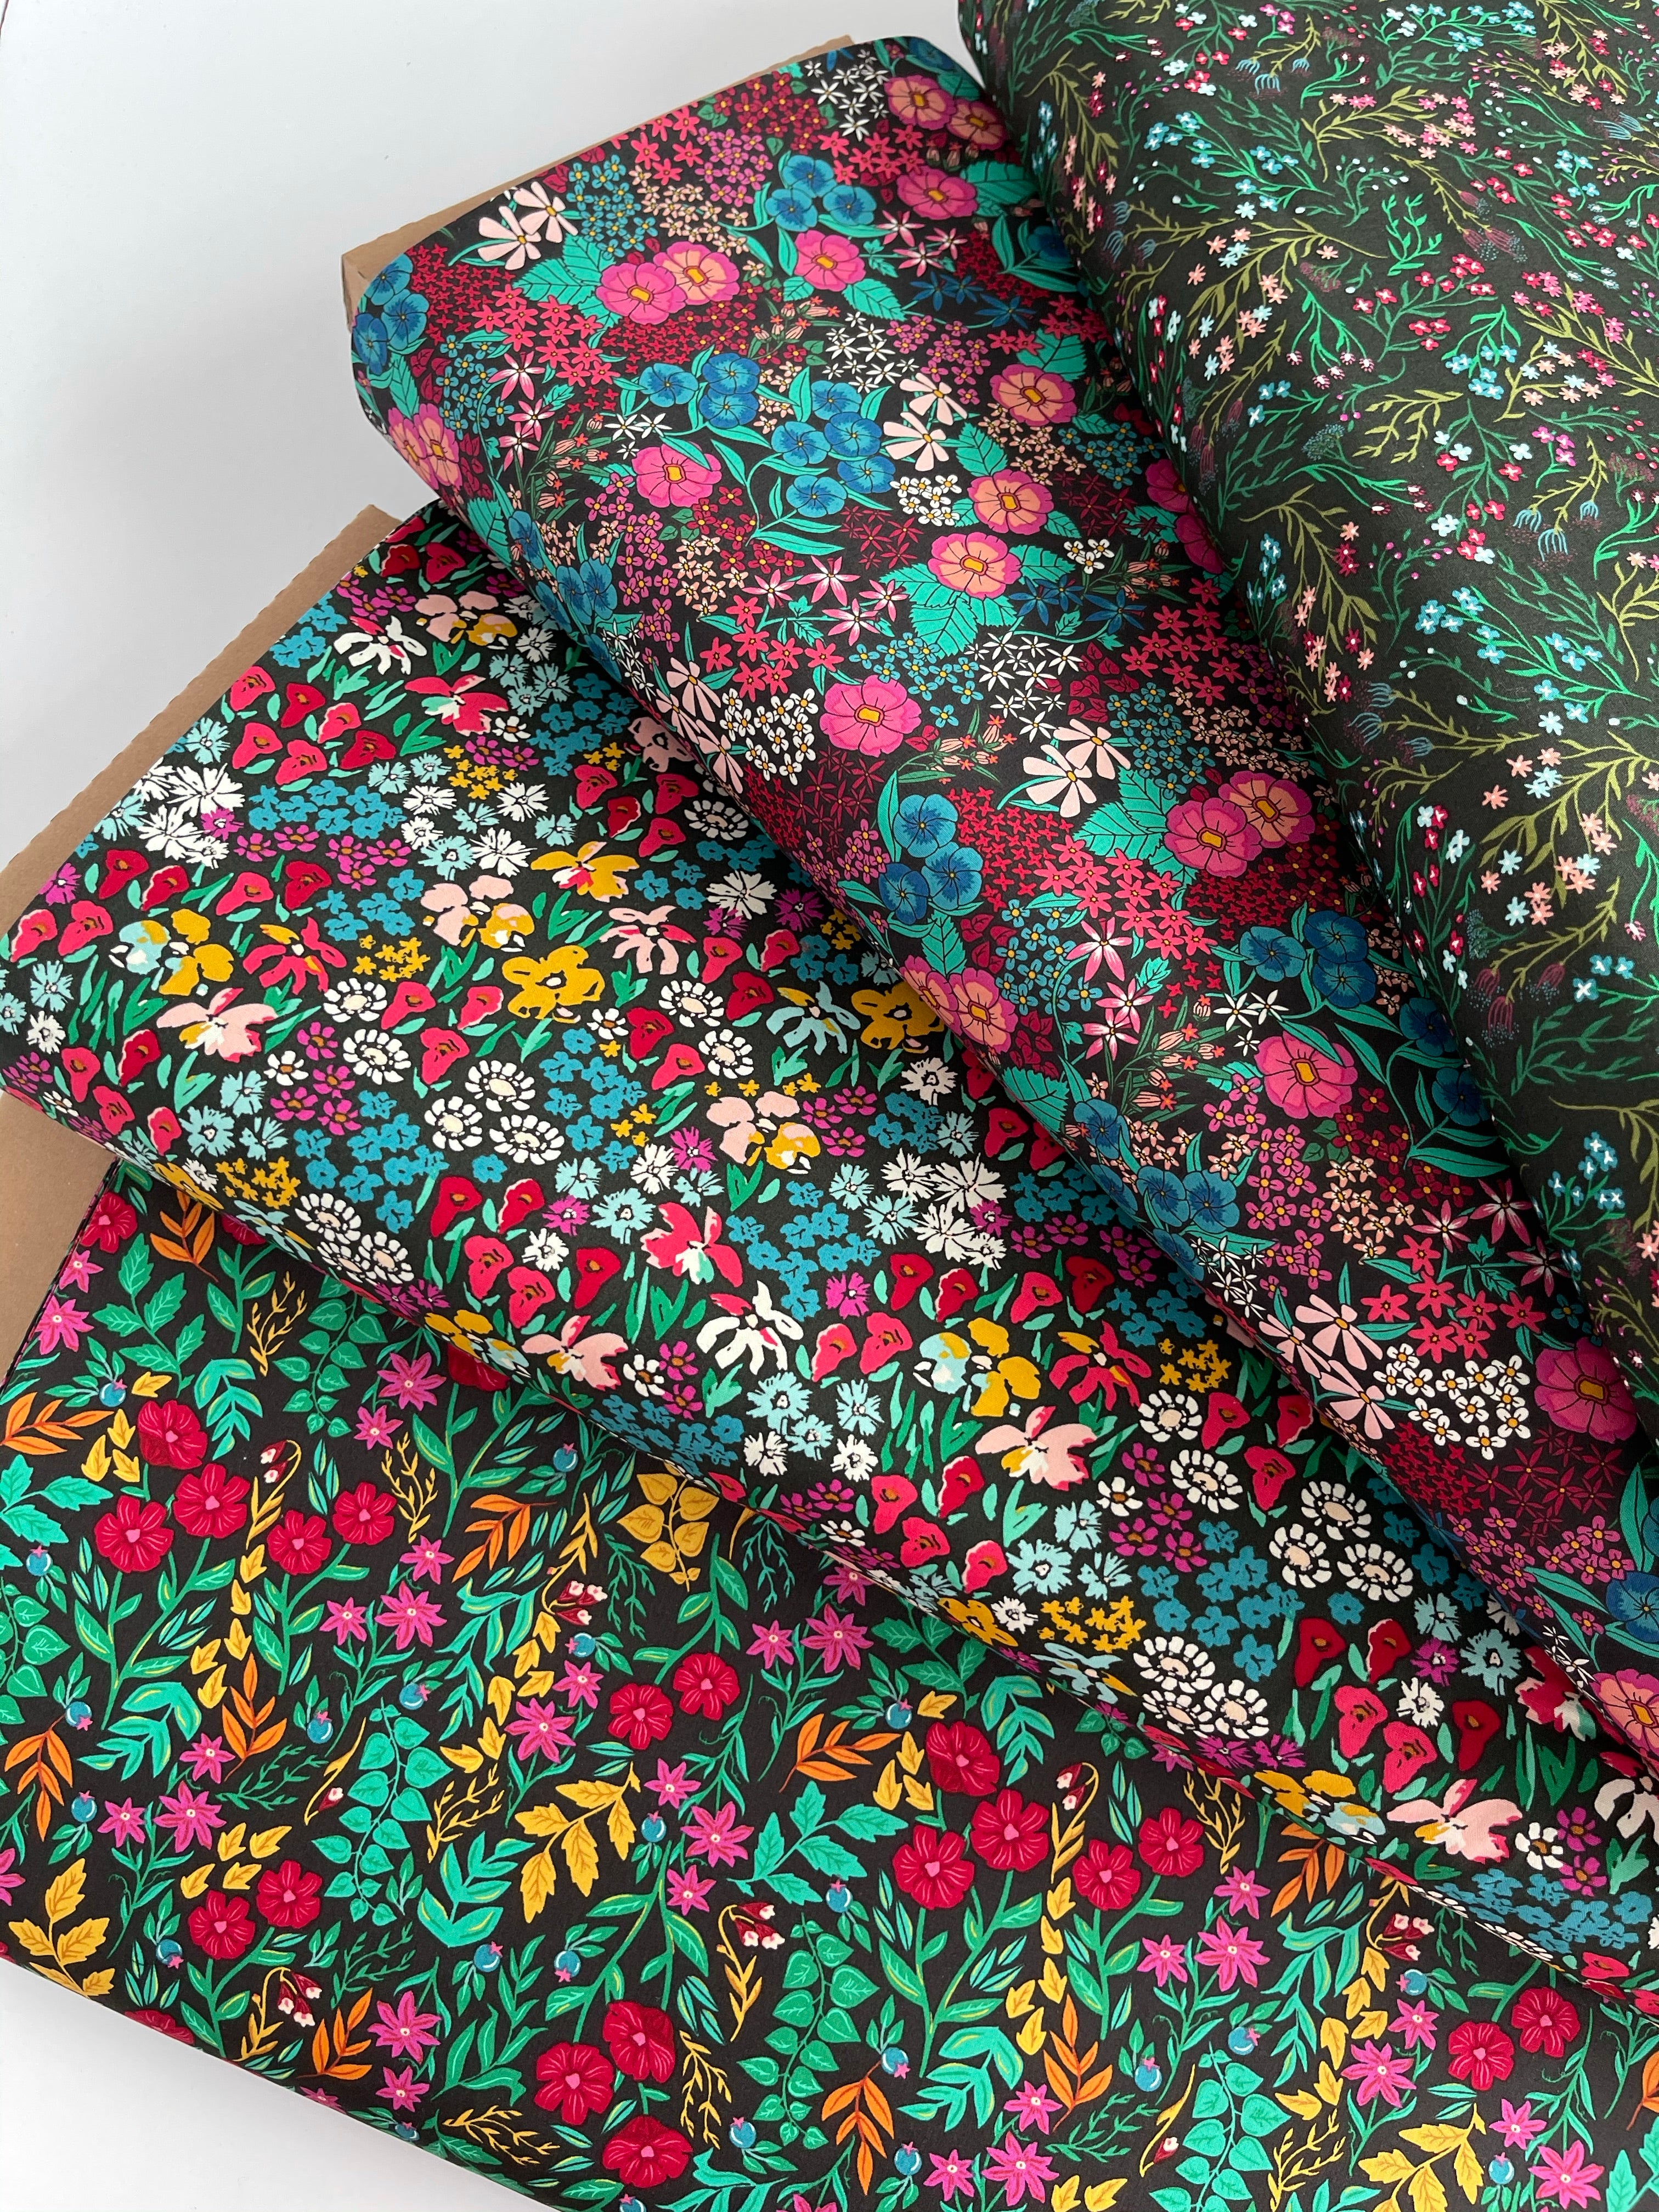 Art Gallery Fabrics - Luminous Floriculture Cotton from Flower Society